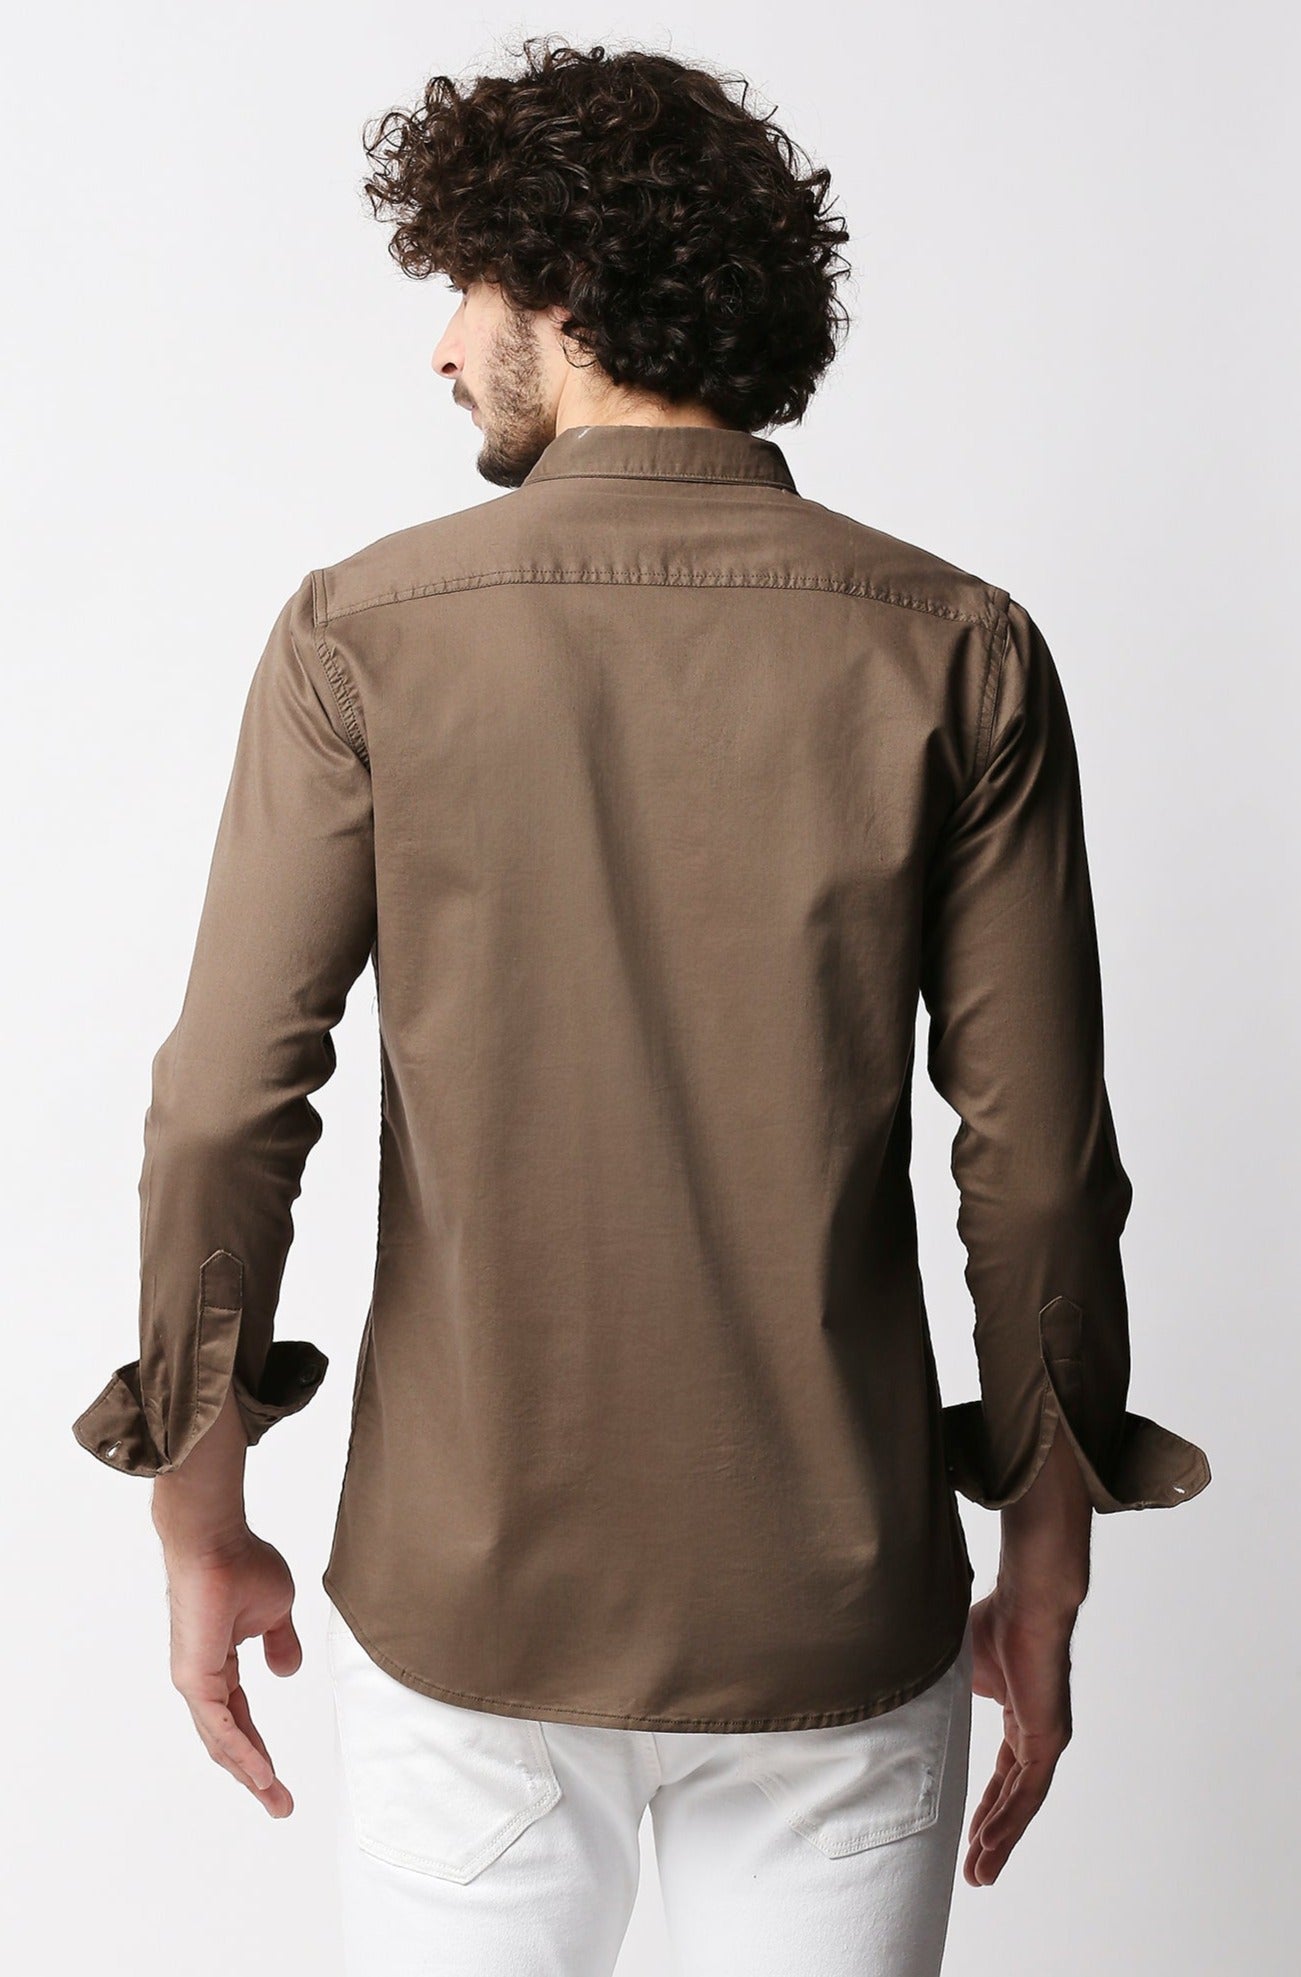 Fostino Brown Double Pocket Full Sleeves Casual Shirt - Fostino - Shirts